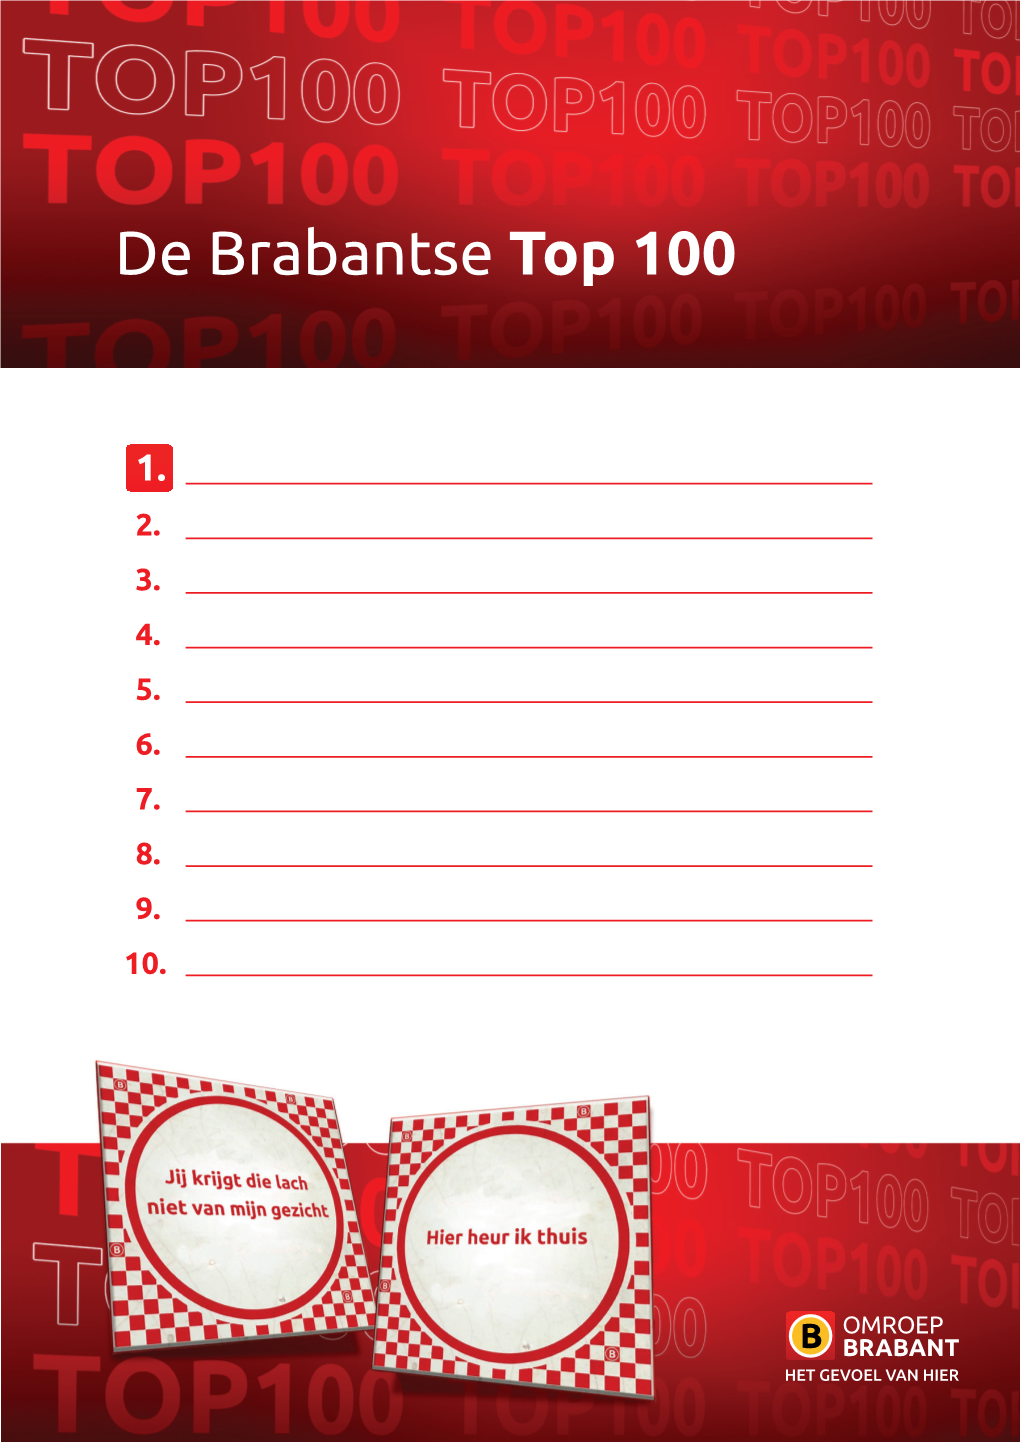 De Brabantse Top 100